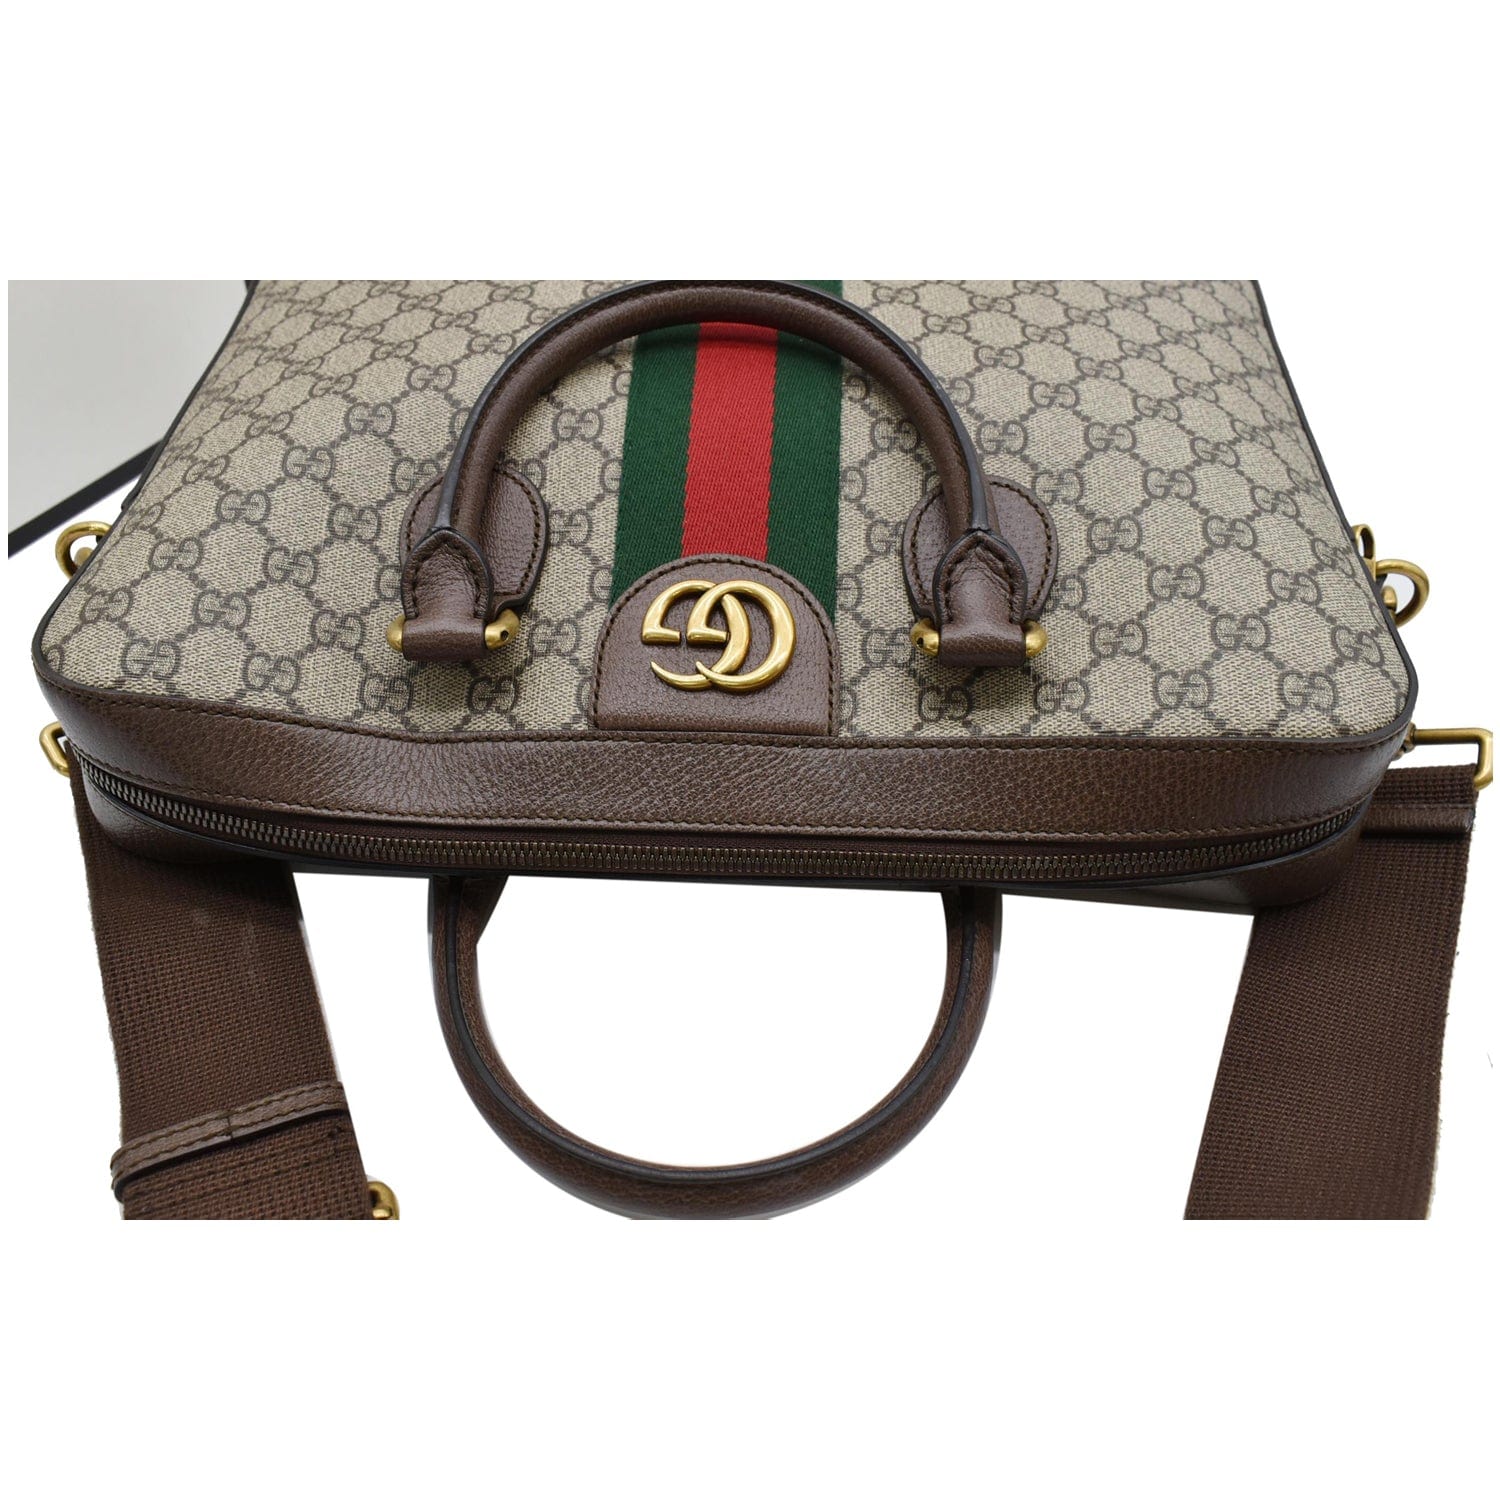 Gucci monogram leather briefcase - Gem